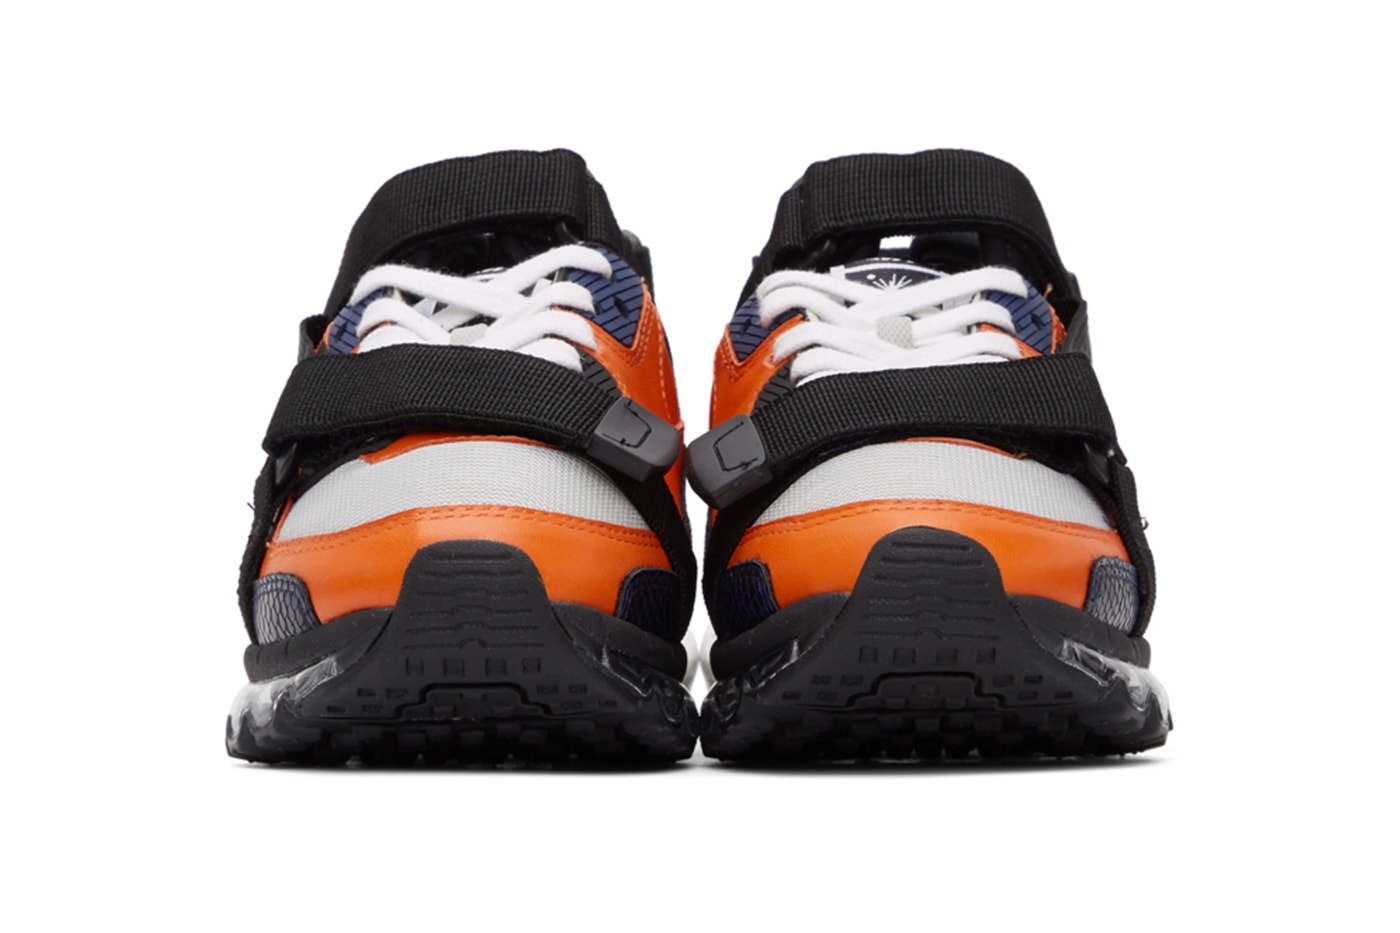 Maison Mihara Yasuhiro Half Sandals Black gray orange sneakers footwear shoes menswear streetwear runner trainers spring summer 2020 collection kicks japanese brand straps